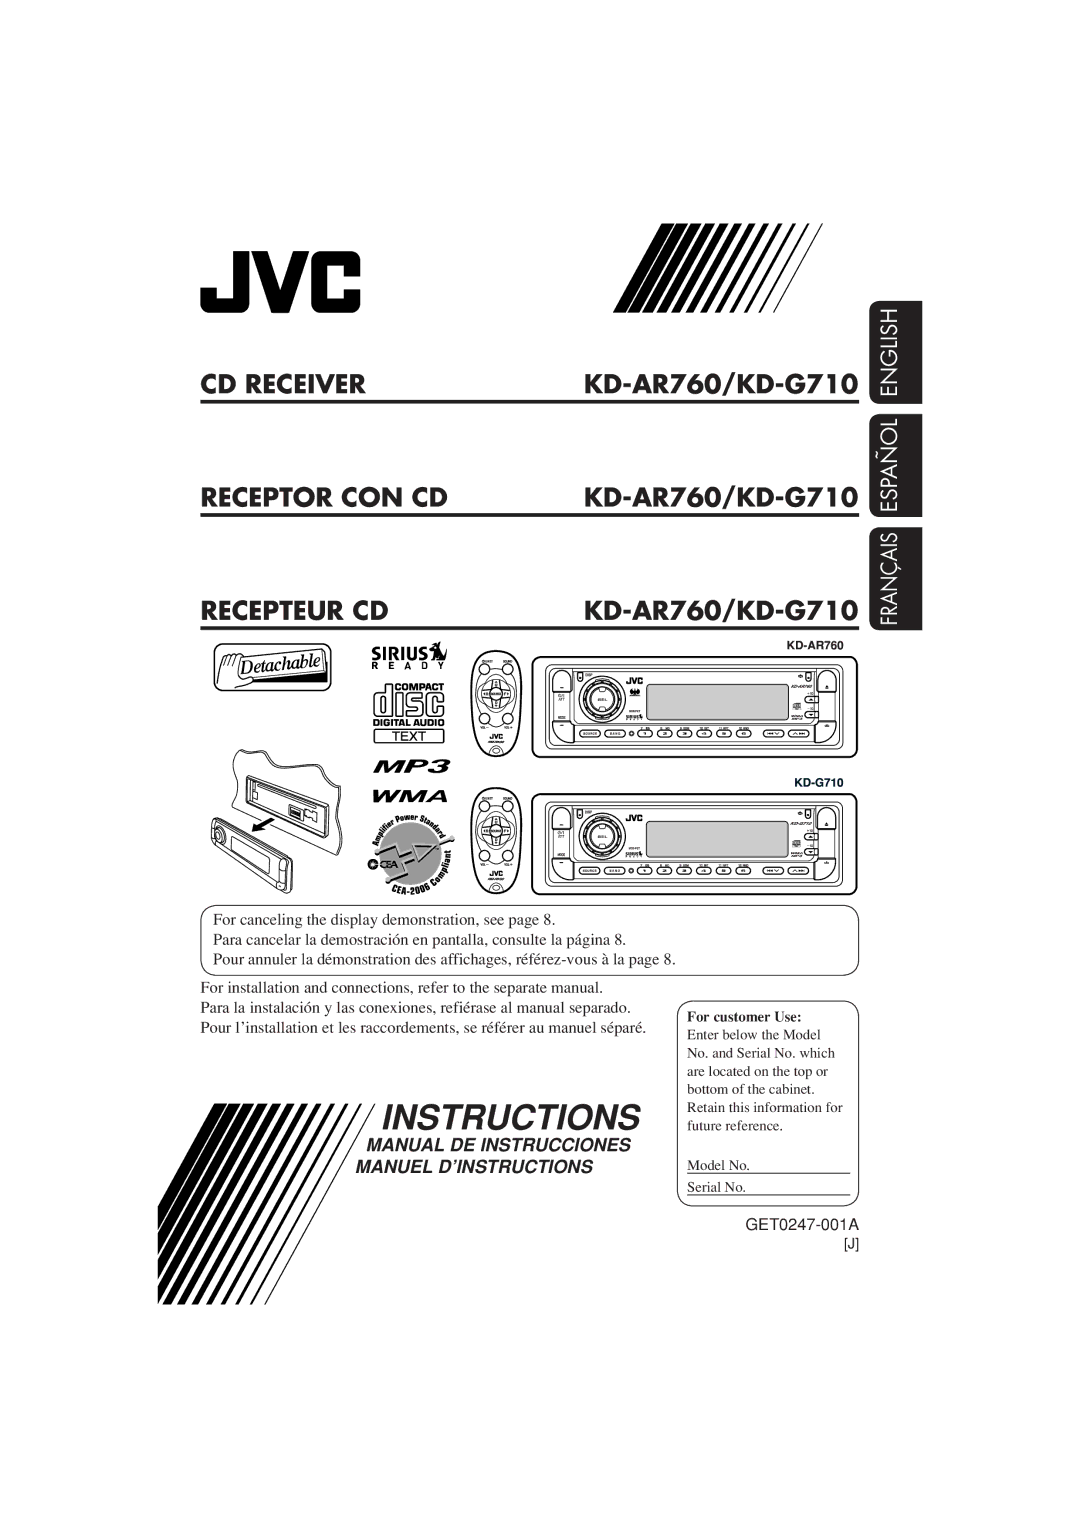 JVC manual CD Receiver Receptor CON CD Recepteur CD, KD-AR760/KD-G710 